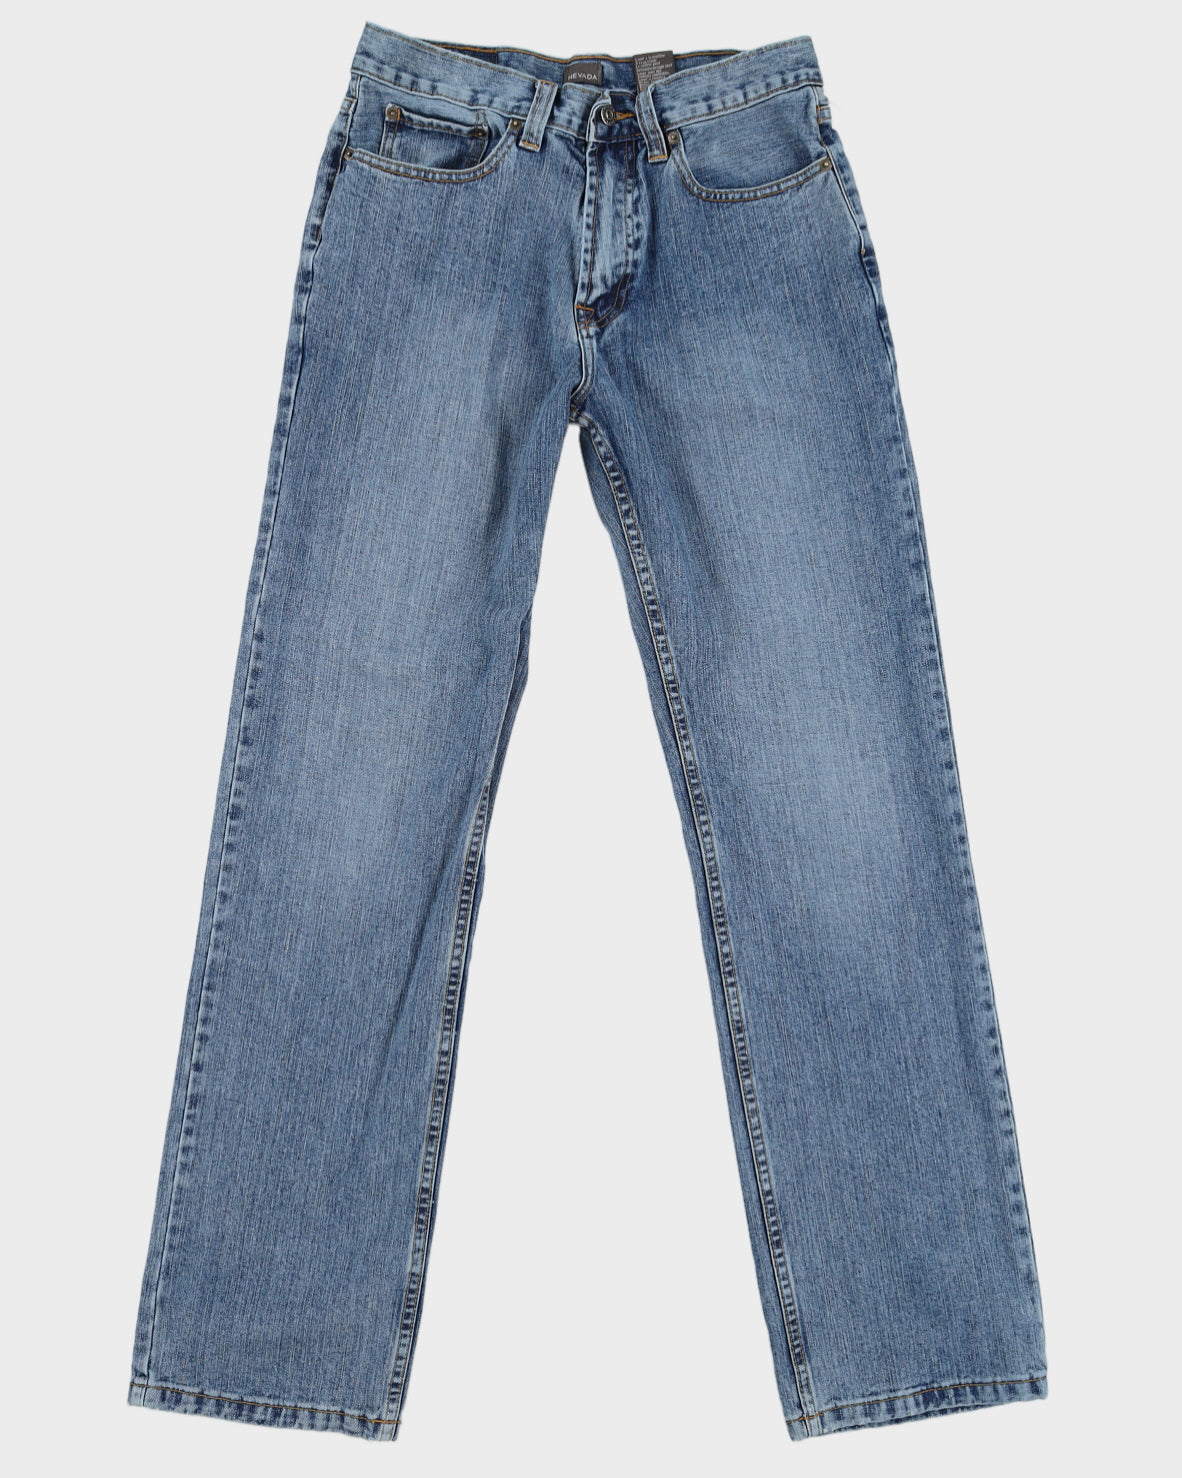 Vintage 90s Nevada Blue Medium Wash Denim Jeans - W32